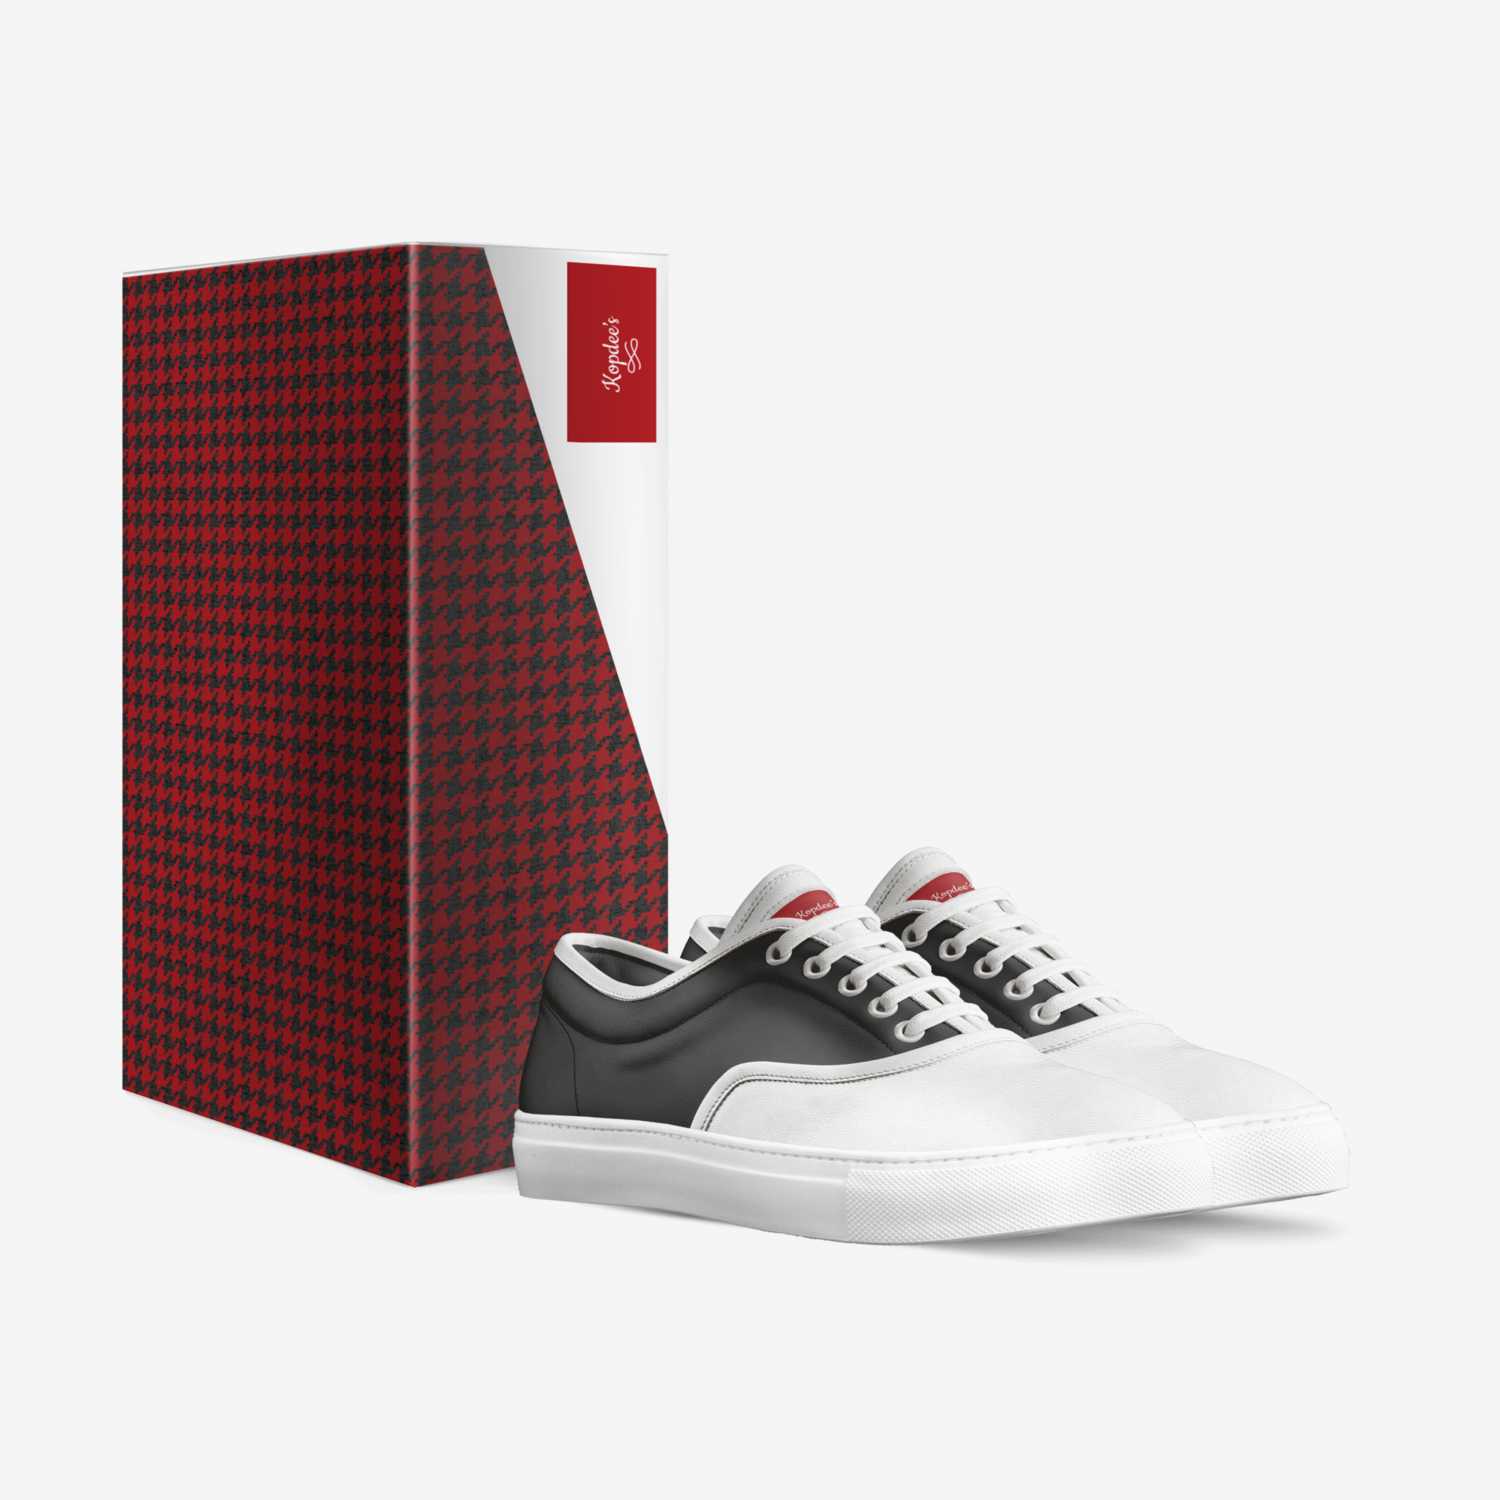 Kopdee’s custom made in Italy shoes by Deshett Davis | Box view